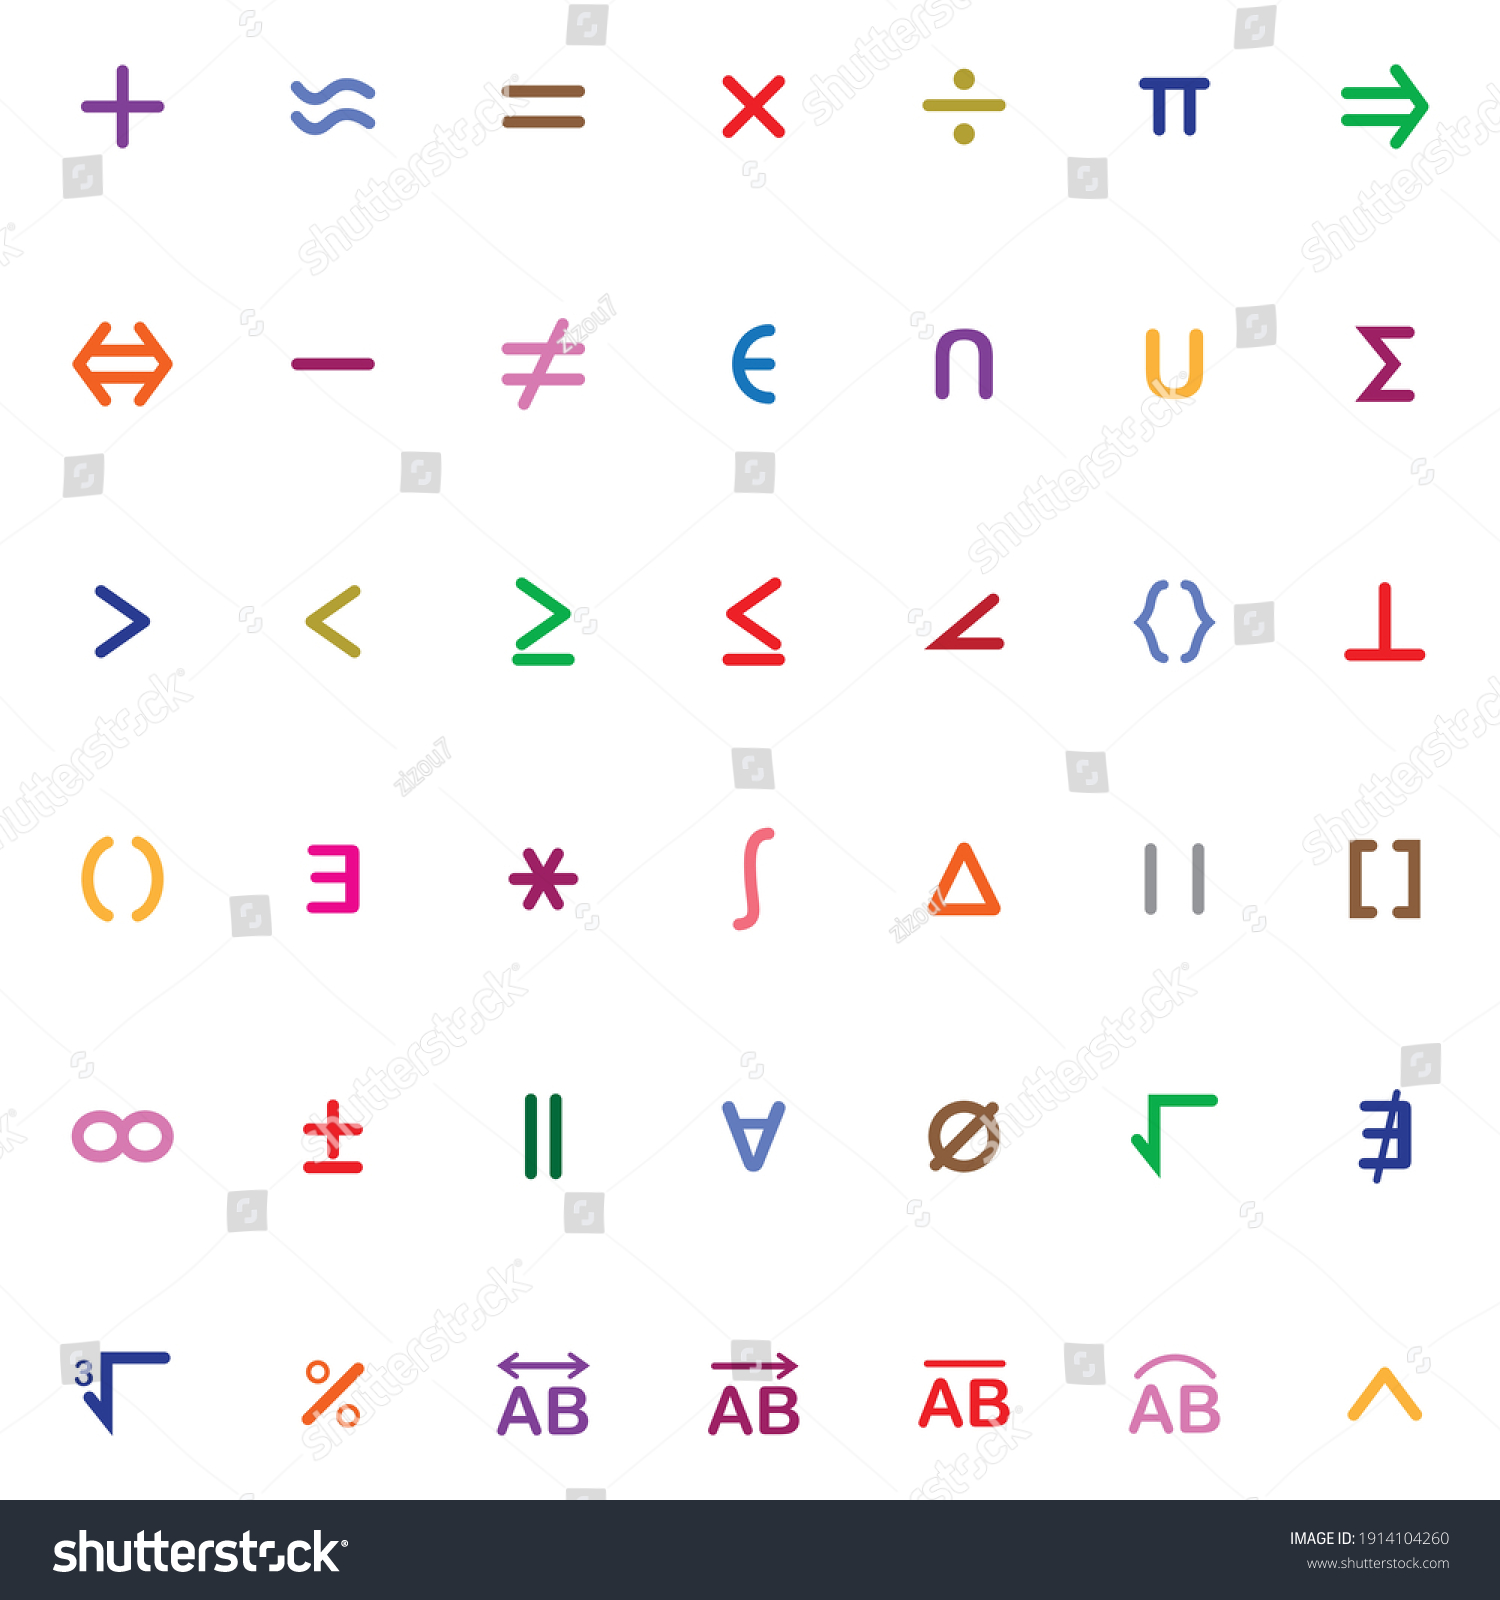 SVG of set of colorful mathematical symbols on white background svg